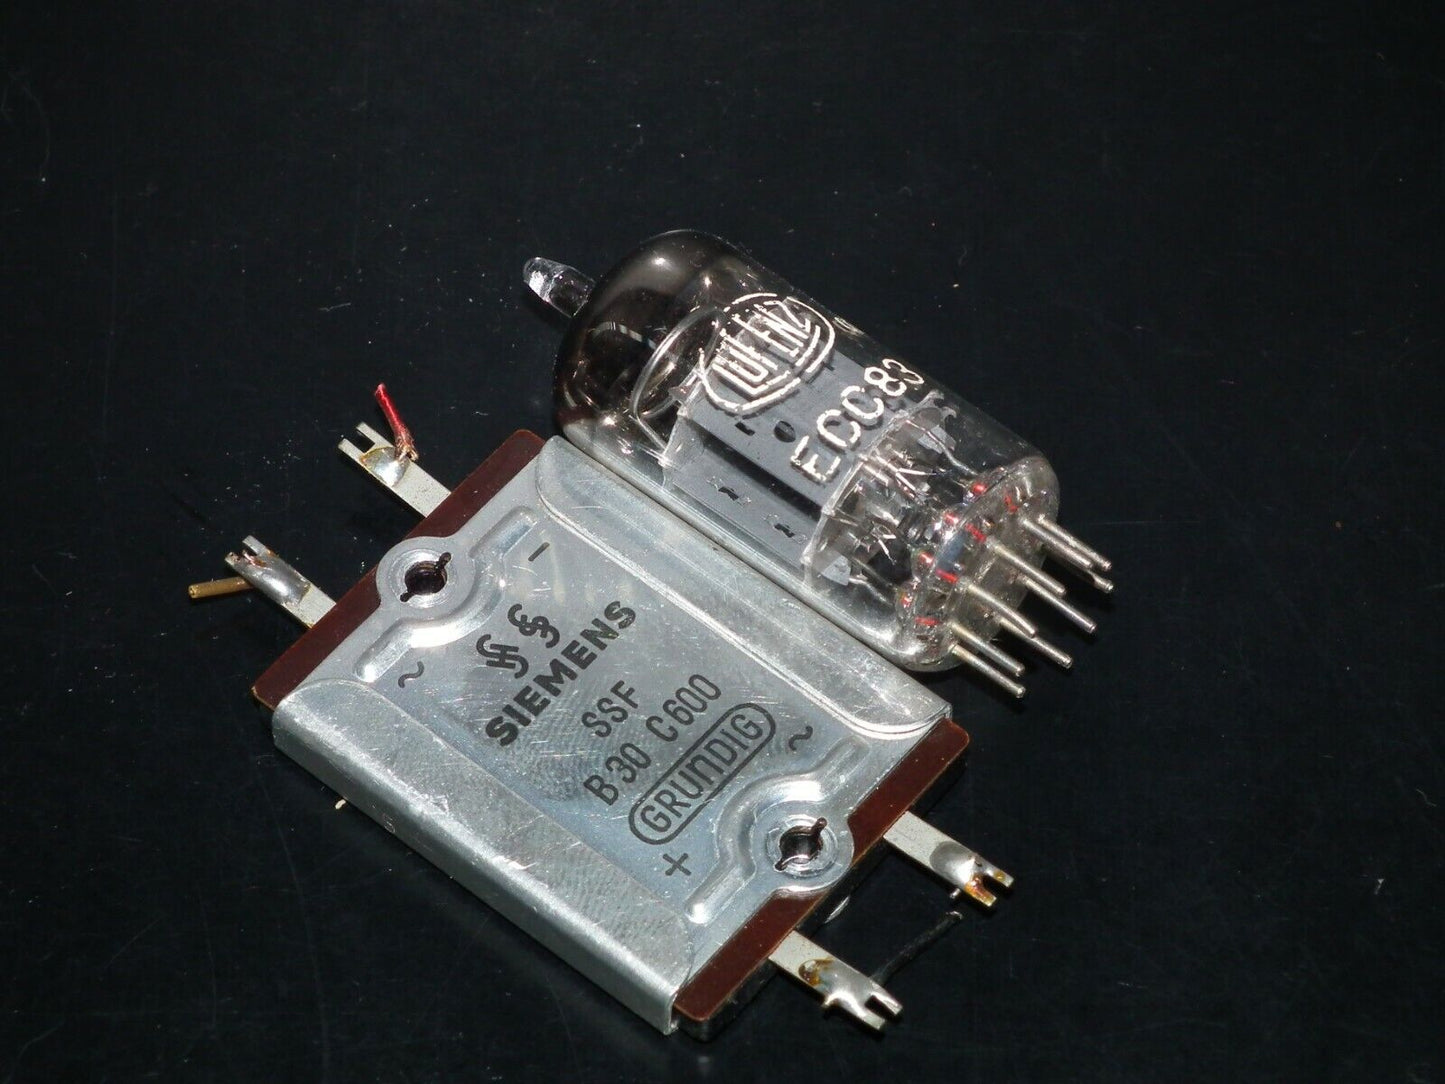 Siemens selenium rectifier B30C600 30V / 600mA Used, tested OK, DIY tube audio